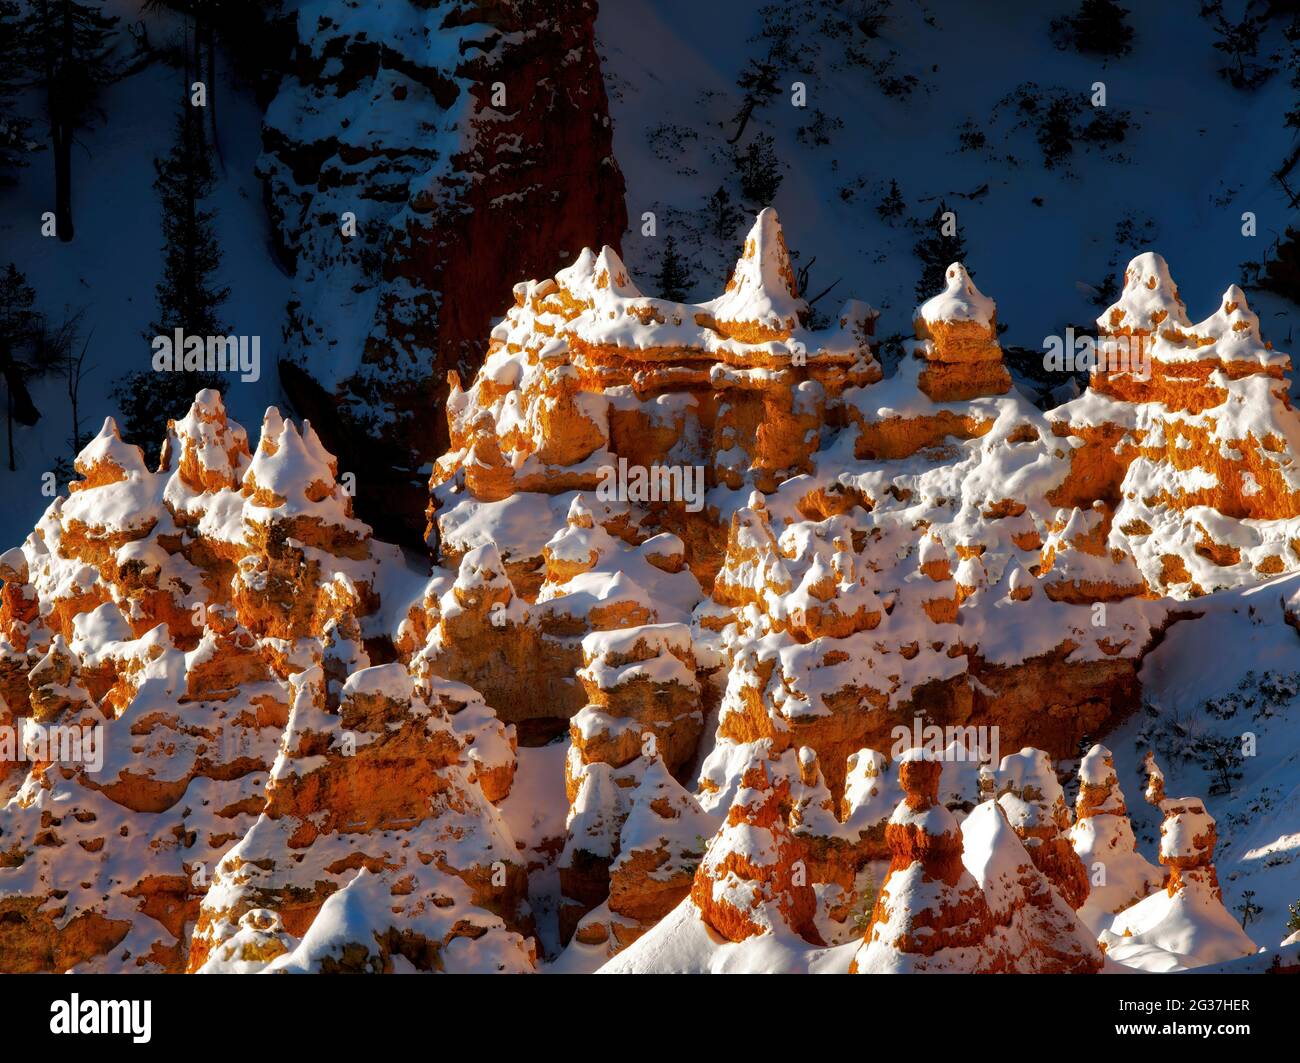 Neve su hoodoos. Parco Nazionale di Bryce Canyon, Utah. Foto Stock